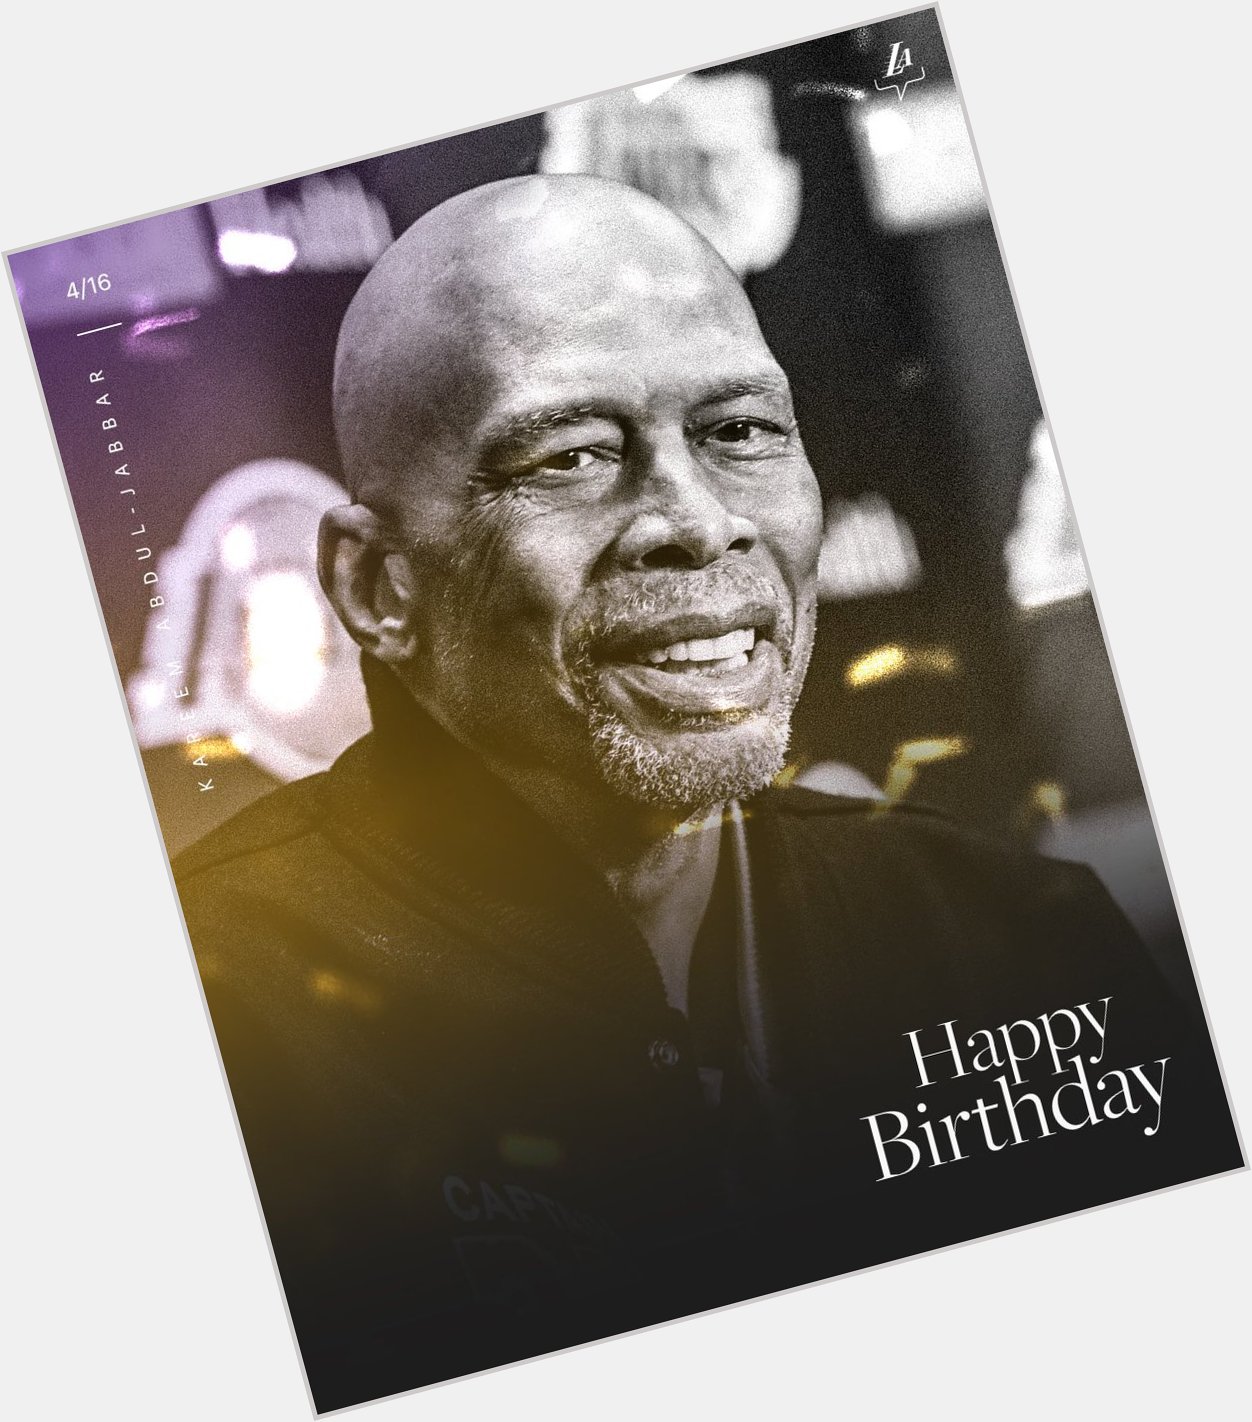  Happy Birthday to Power Memorial\s New York City Basketball Hall of Famer - the great Kareem Abdul Jabbar! 